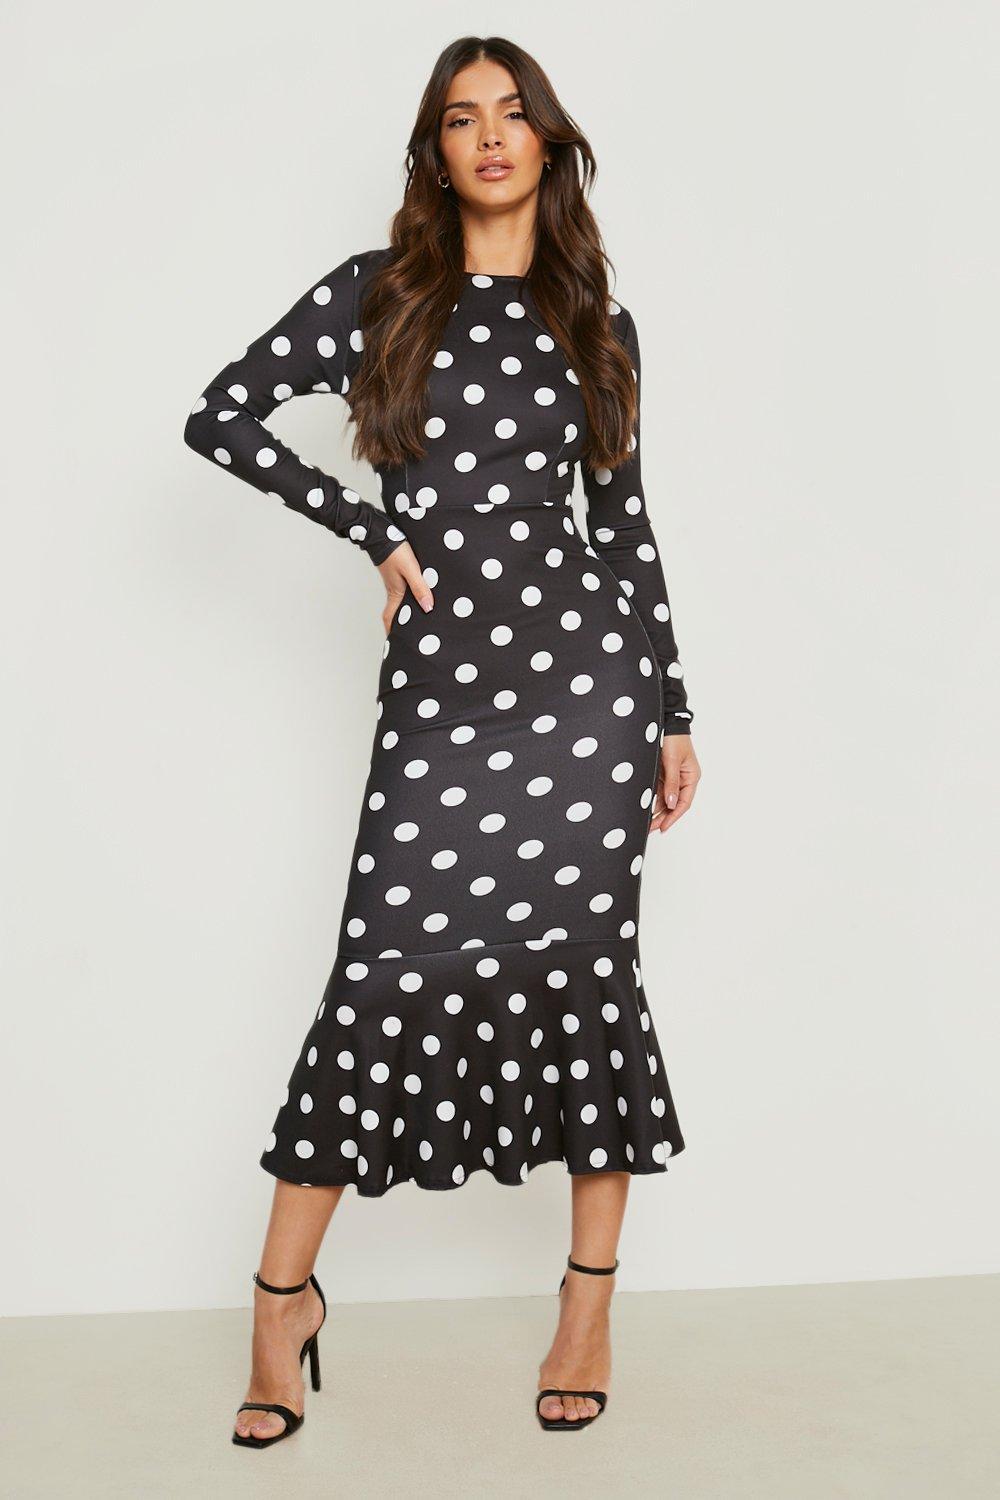 black and white polka dot long sleeve dress